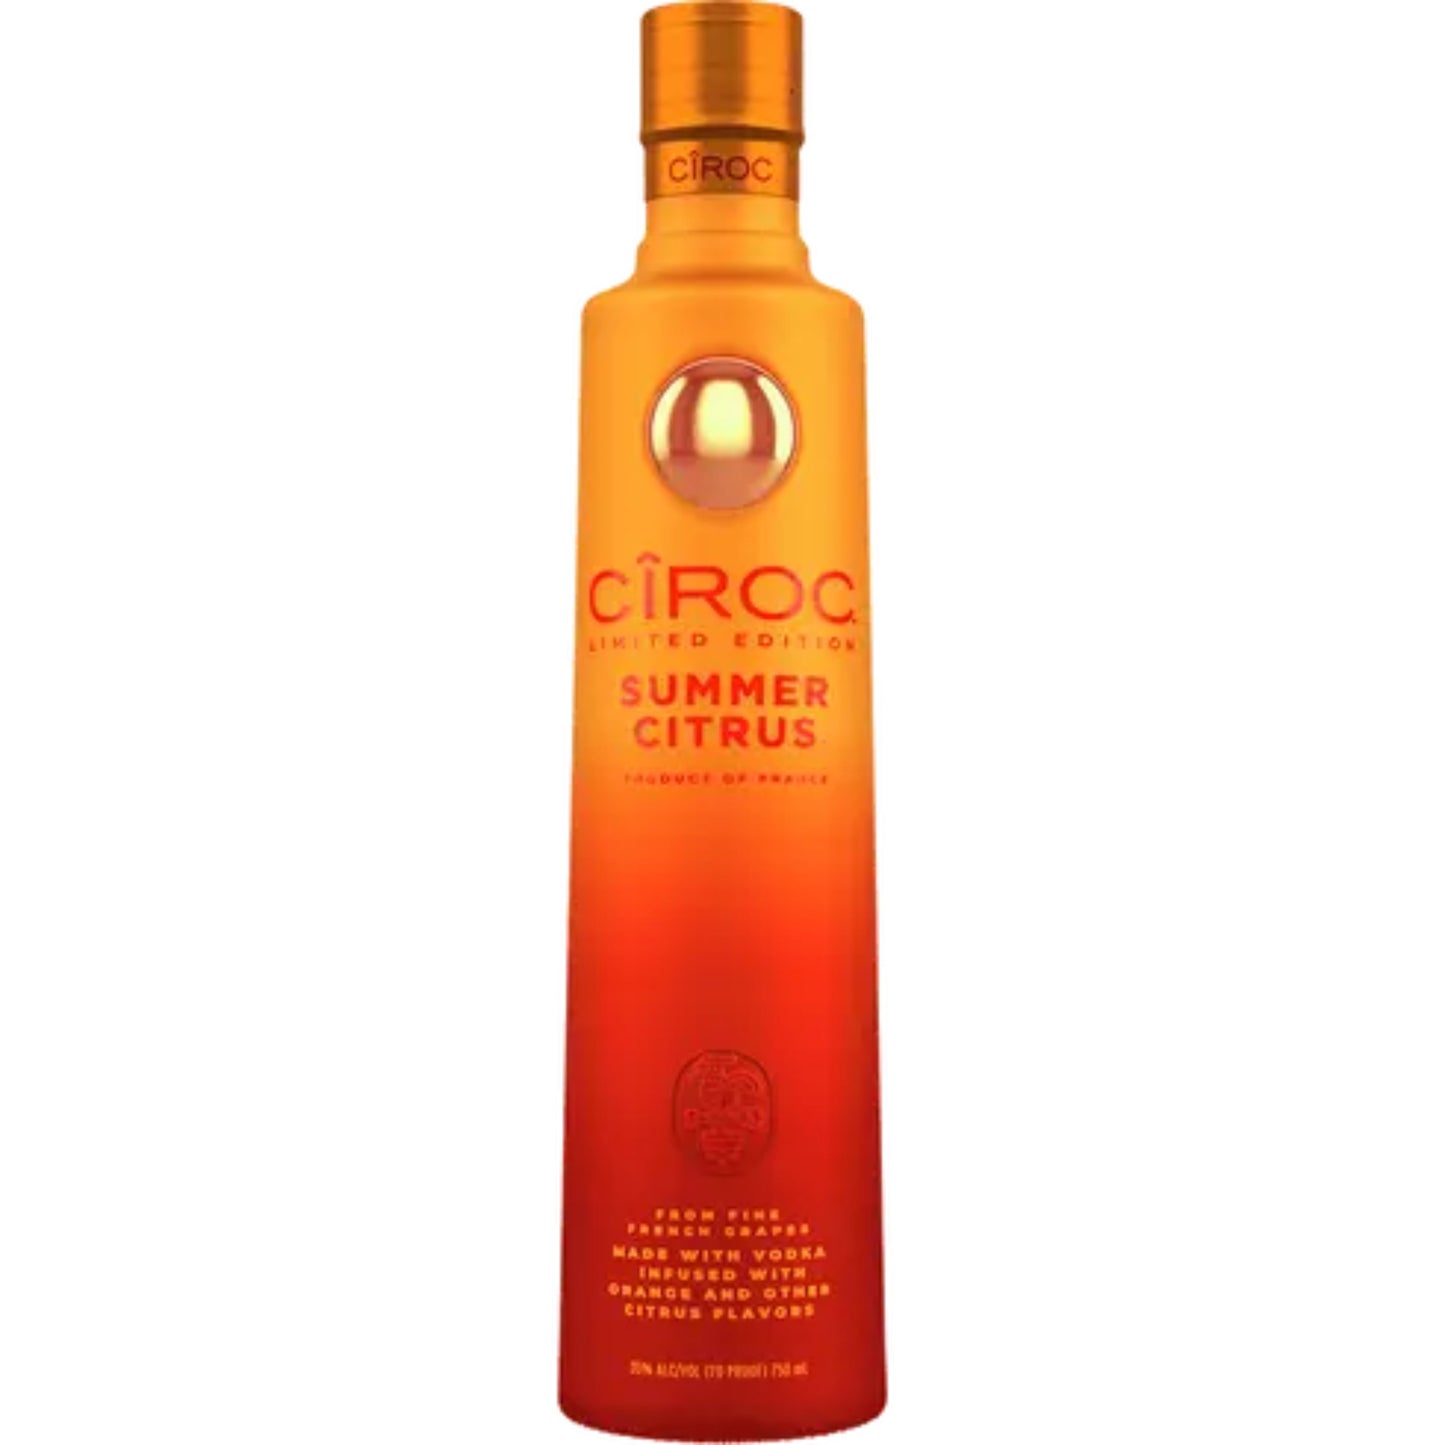 Ciroc Limited Edition Summer Citrus - Liquor Geeks